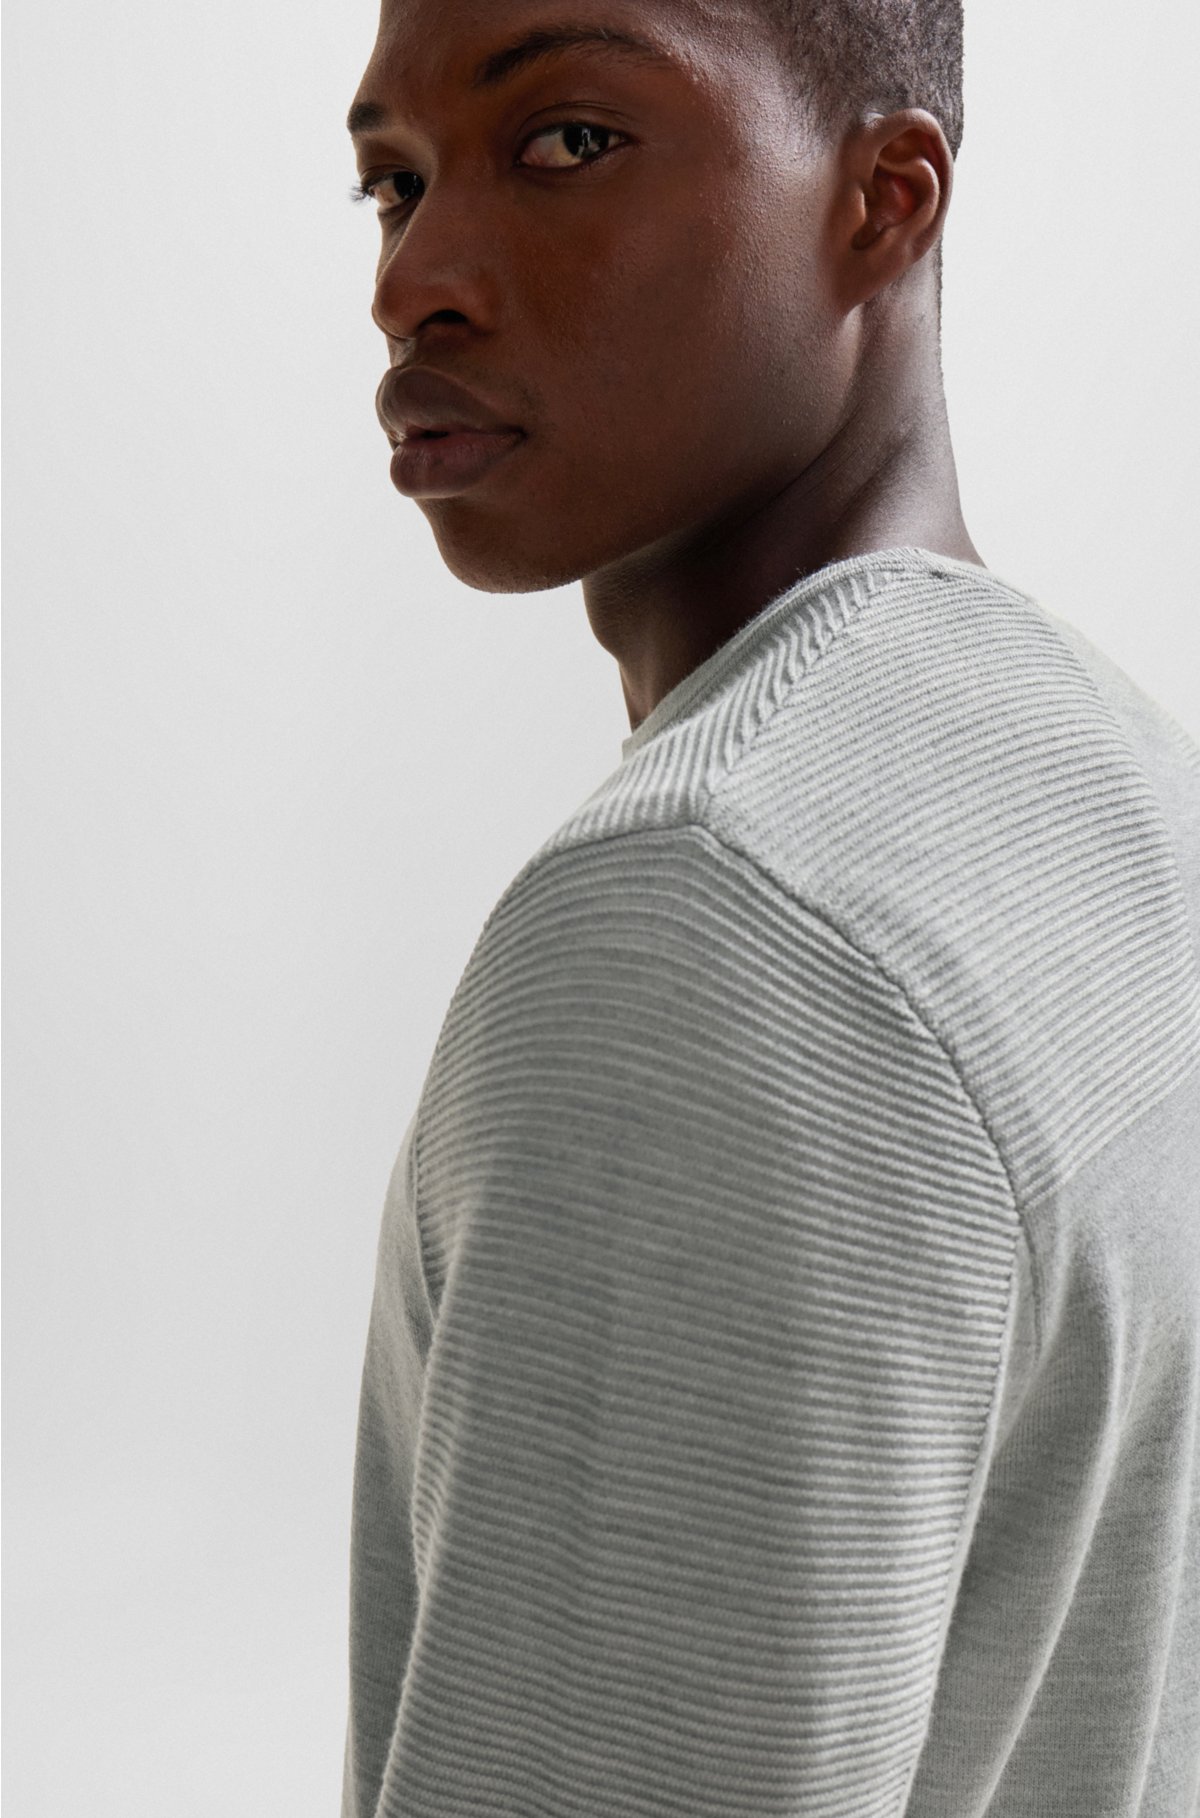 Branded crew-neck sweater in dry-flex fabric, Light Grey